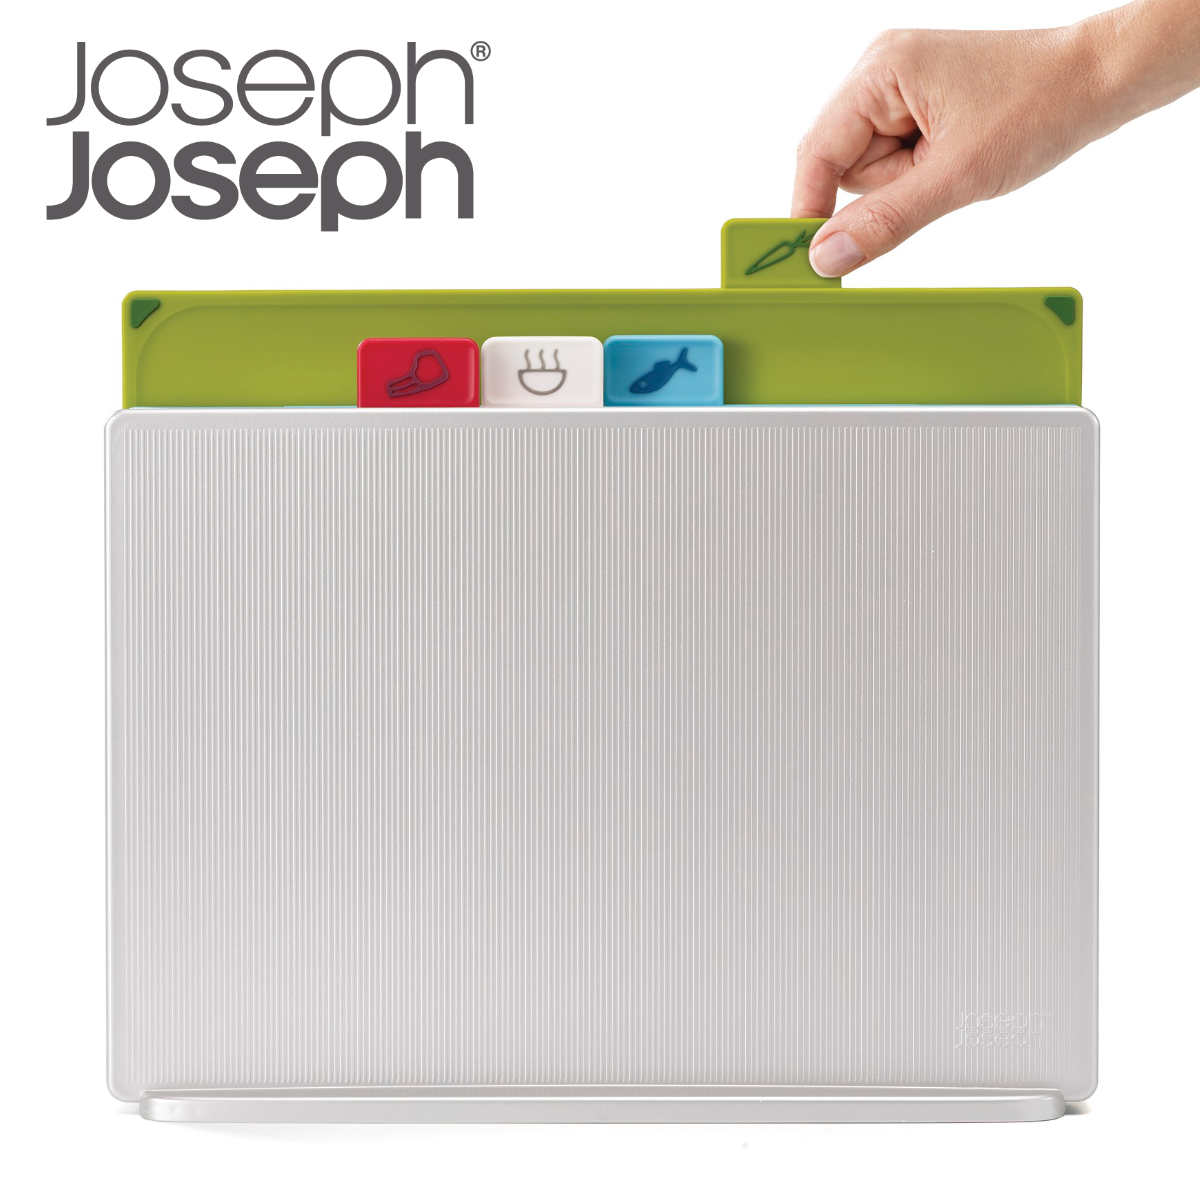 Joseph Joseph インデックス付まな板 アドバンス2.0 ラージ 4枚セット ケース付き （ 送料無料 ジョセフジョセフ まな板 俎板 カッティングボード 収納ケース セット 食洗機対応 使い分け まな板立て まな板スタンド 調理用品 ）